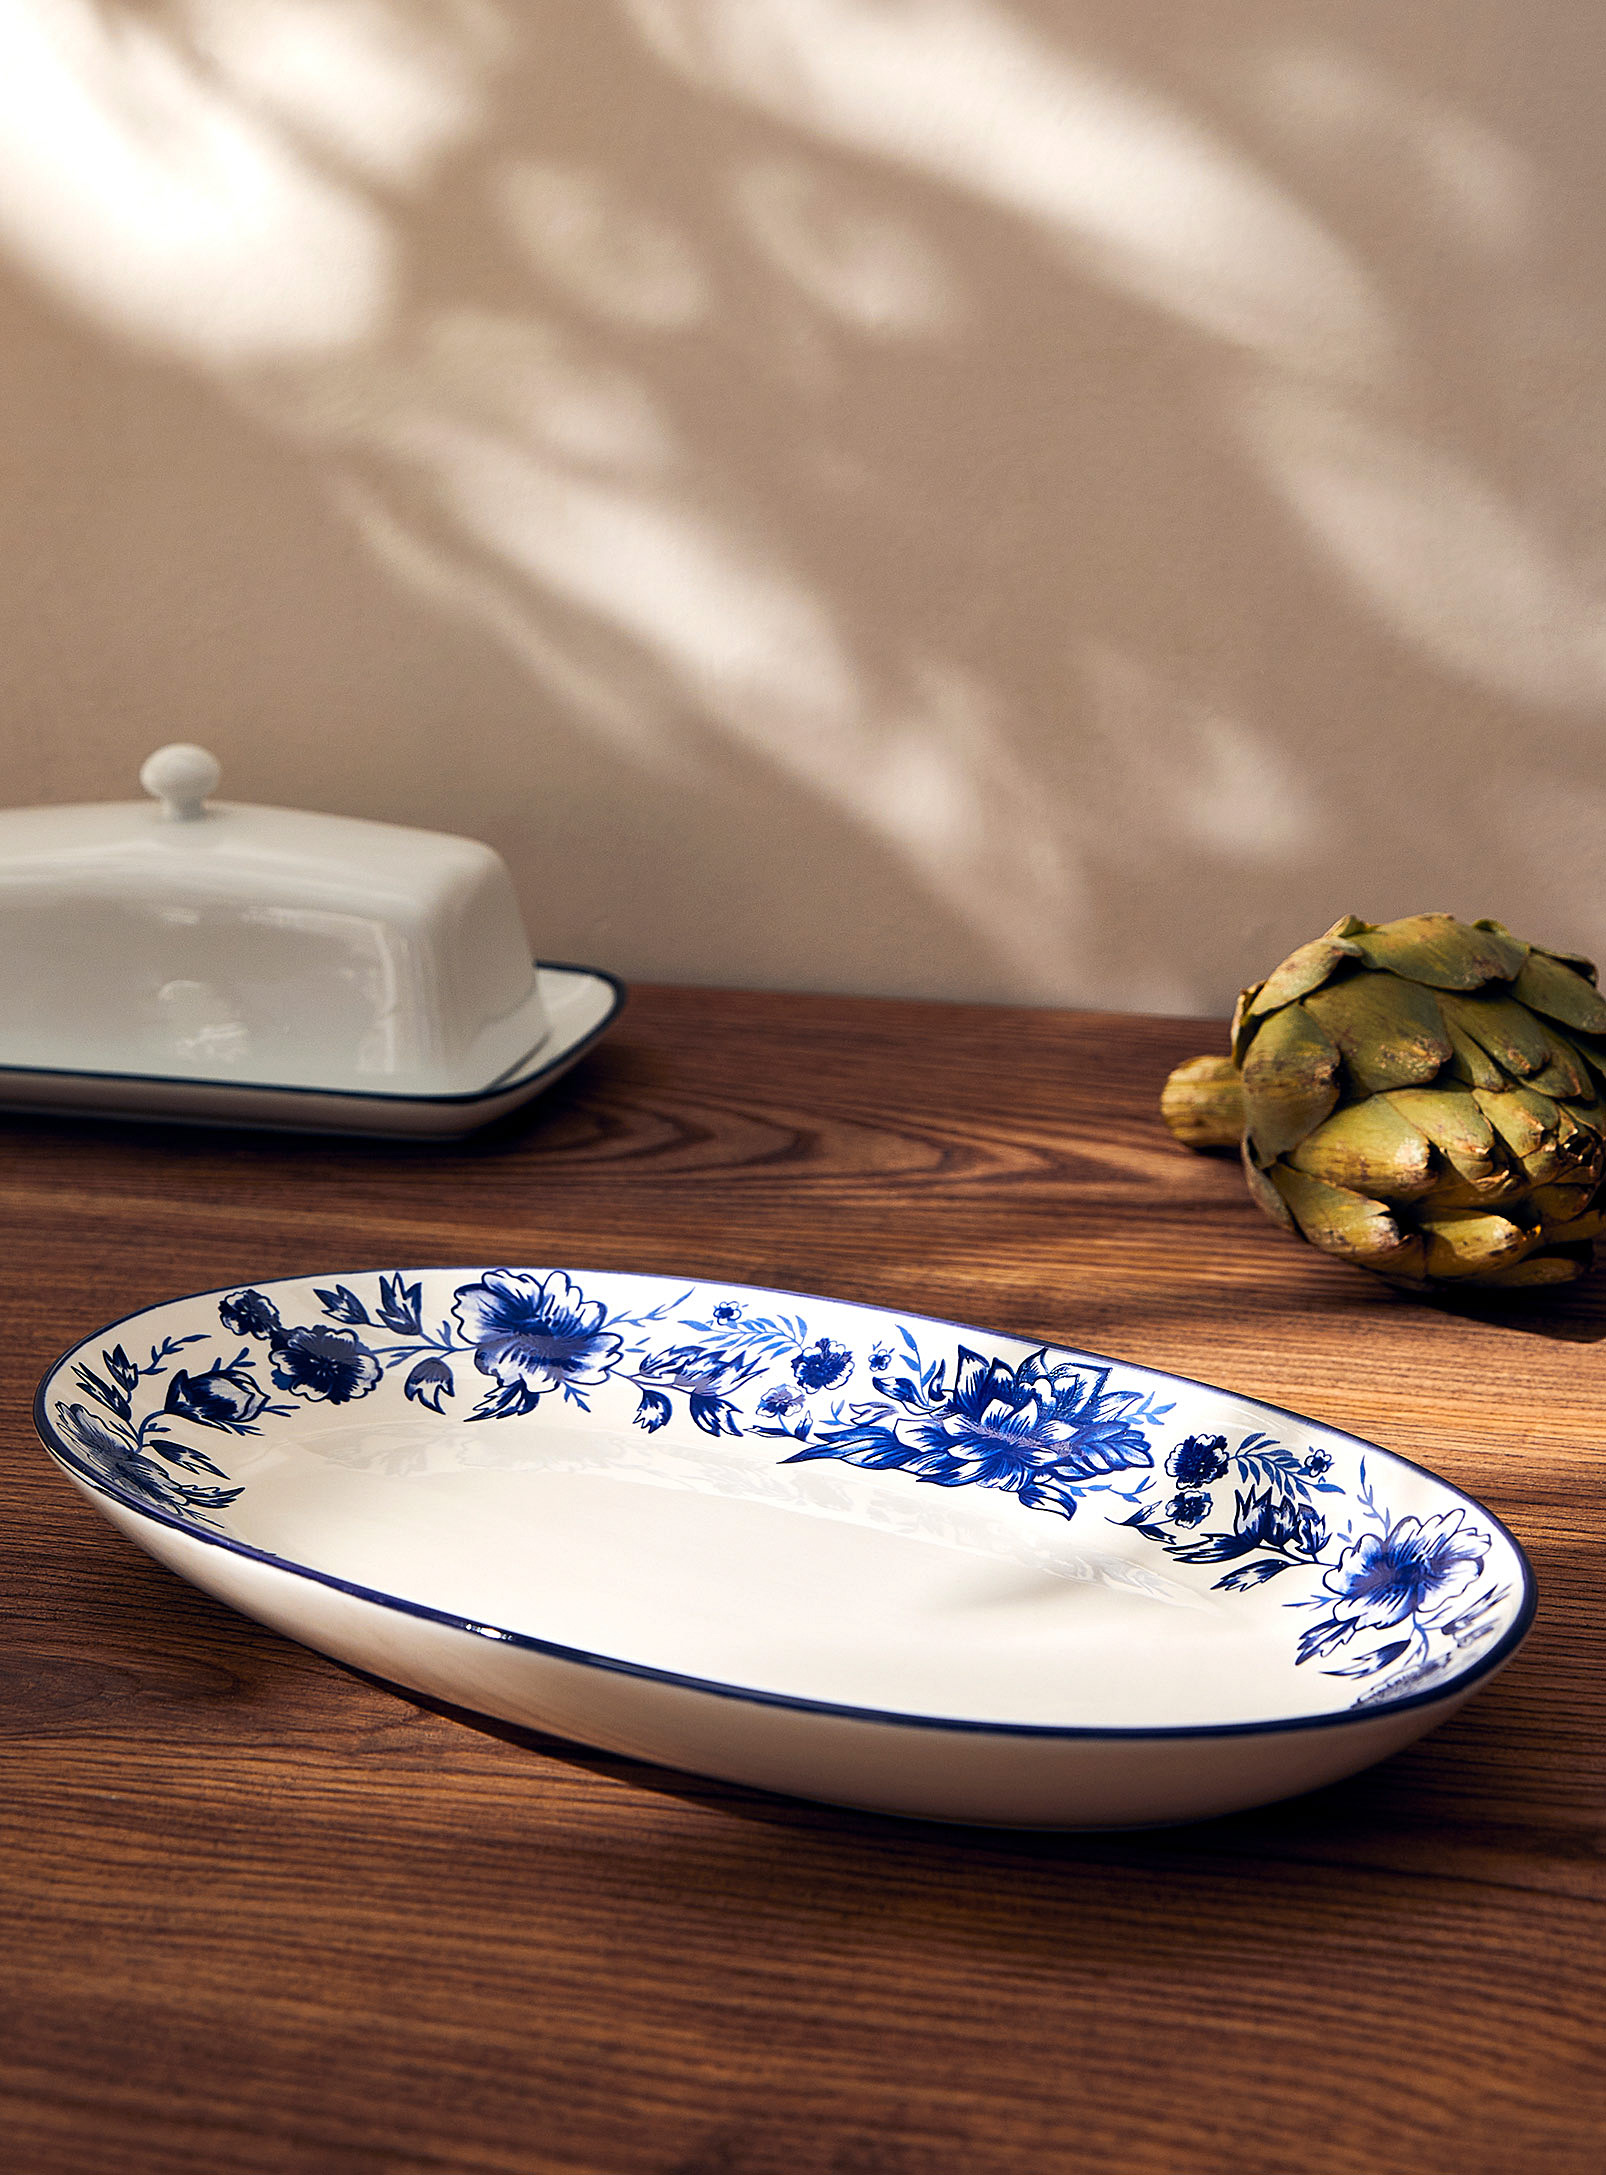 Simons Maison - Floral ceramic serving tray